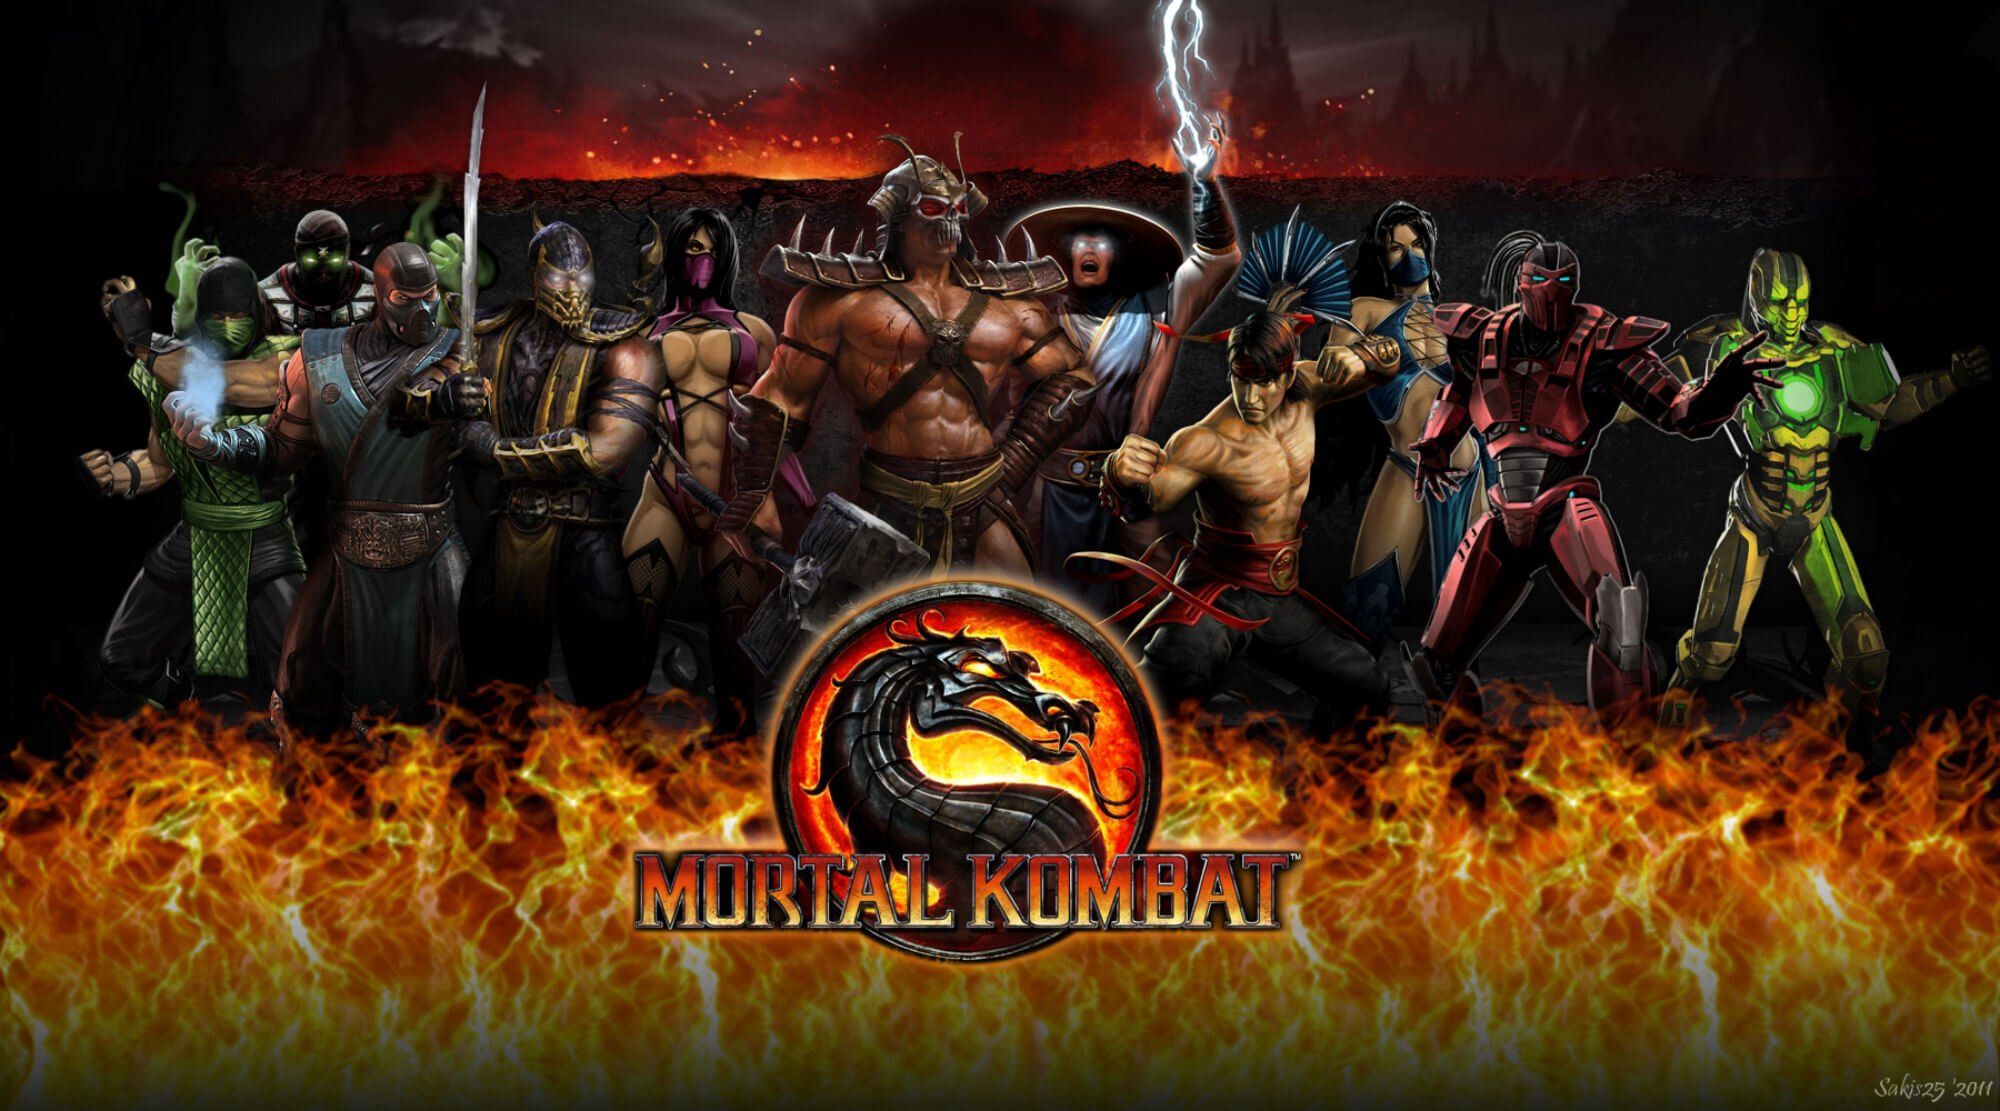 Mortal kombat domination the movie